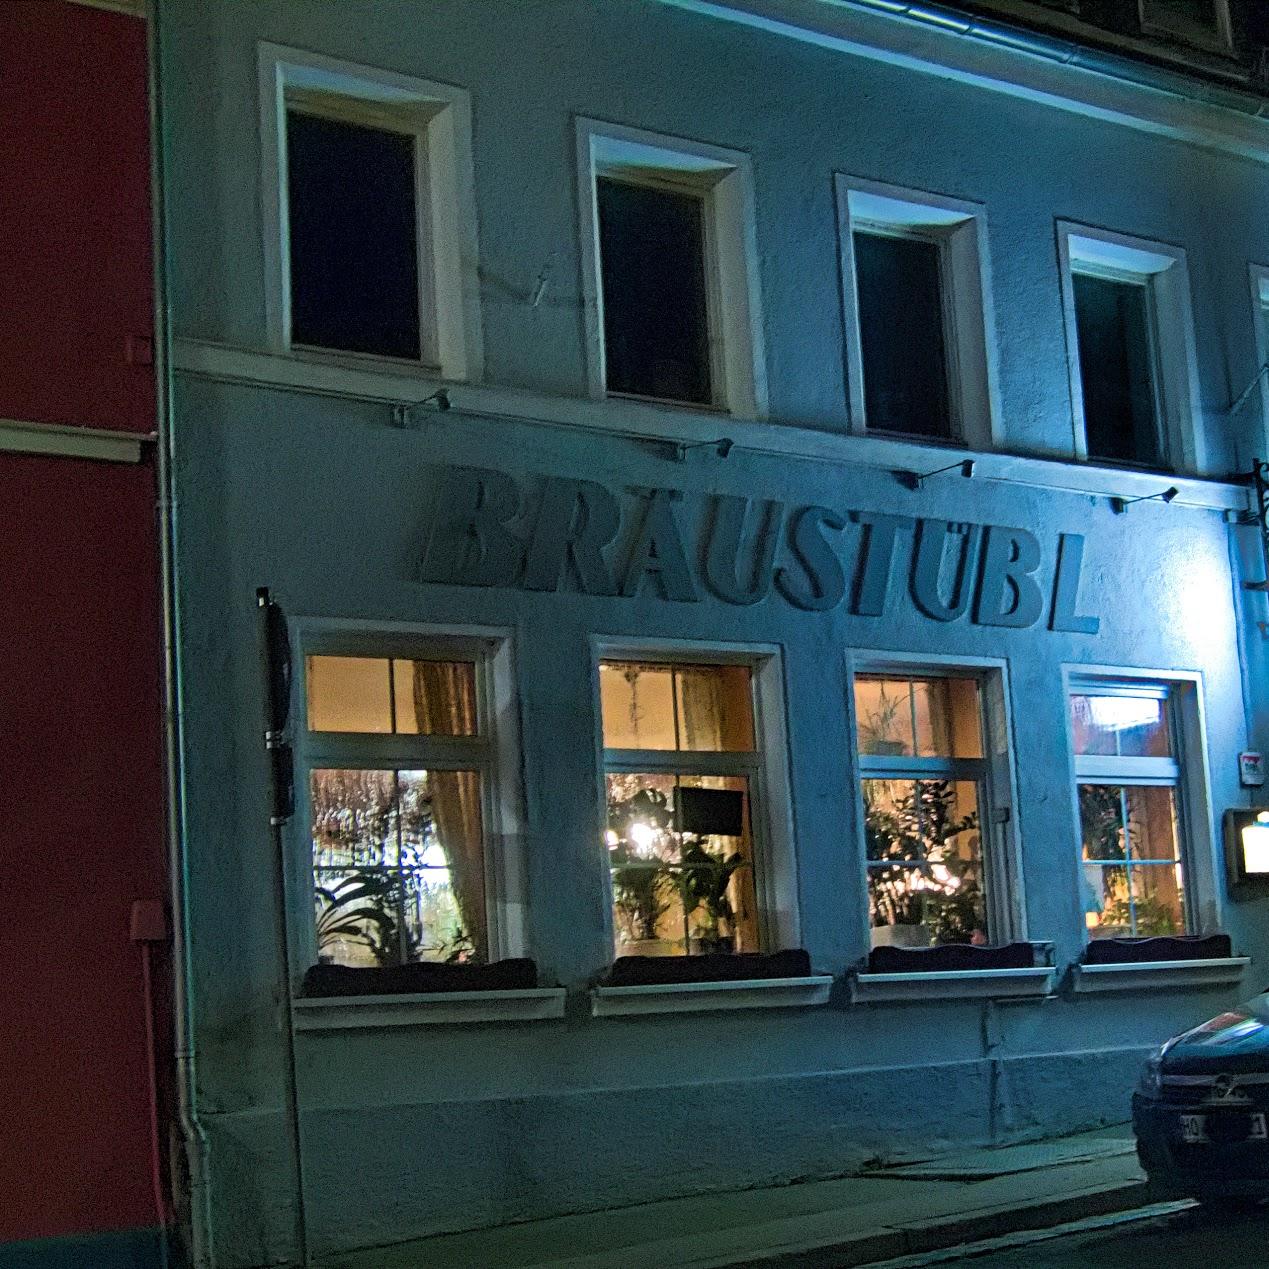 Restaurant "Bräustübl" in  Helmbrechts